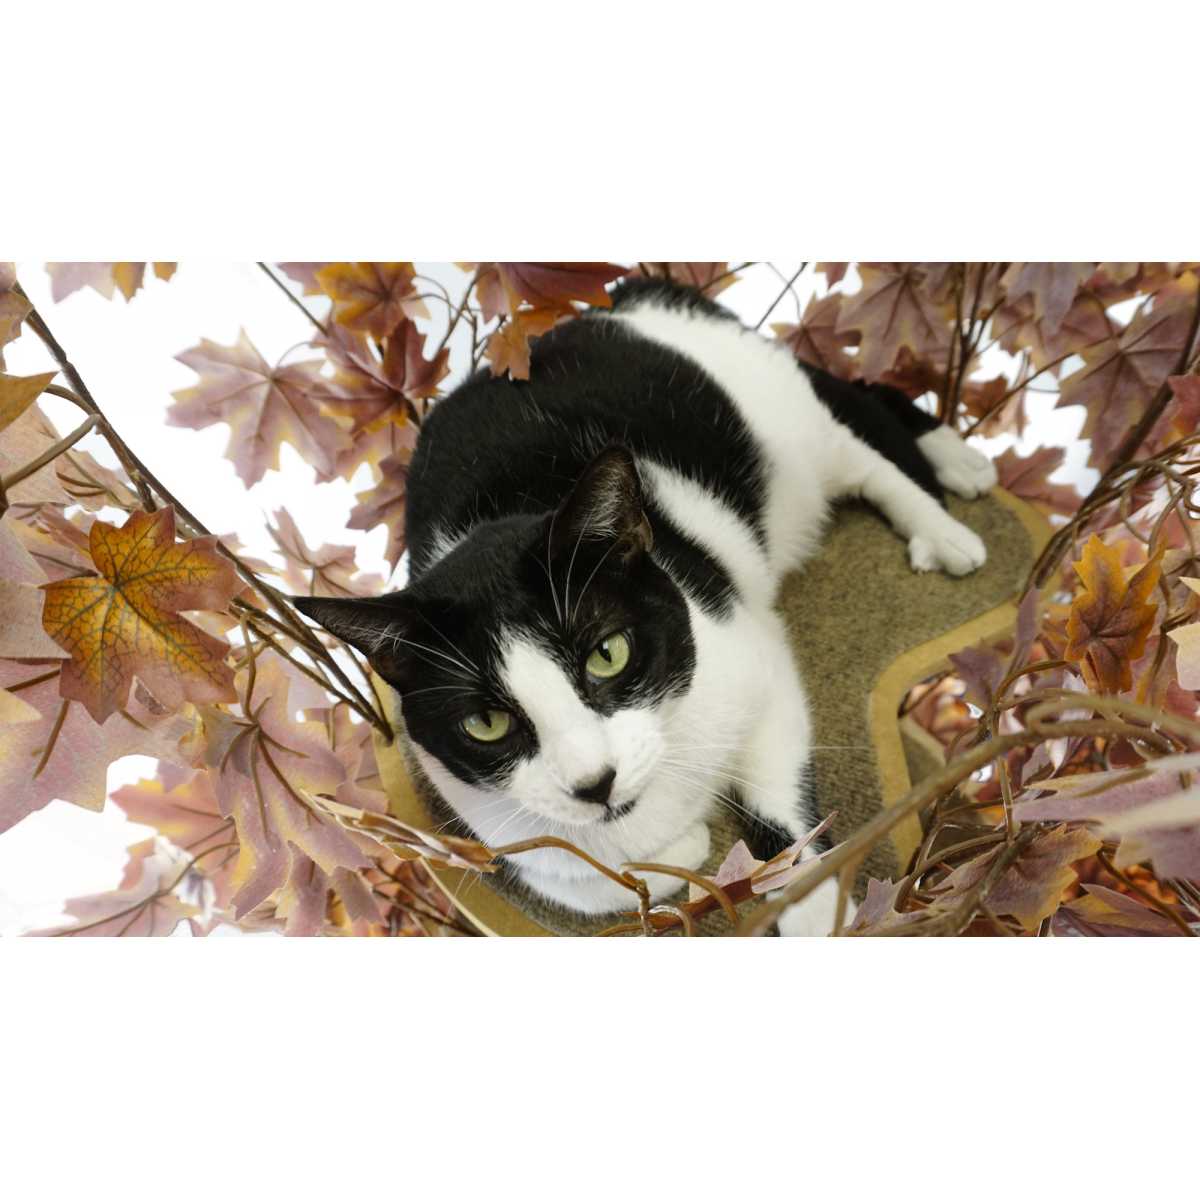 Deluxe Cushioned Lap TrayWooden FrameBirman Burmese Cat in Autumn Leaves